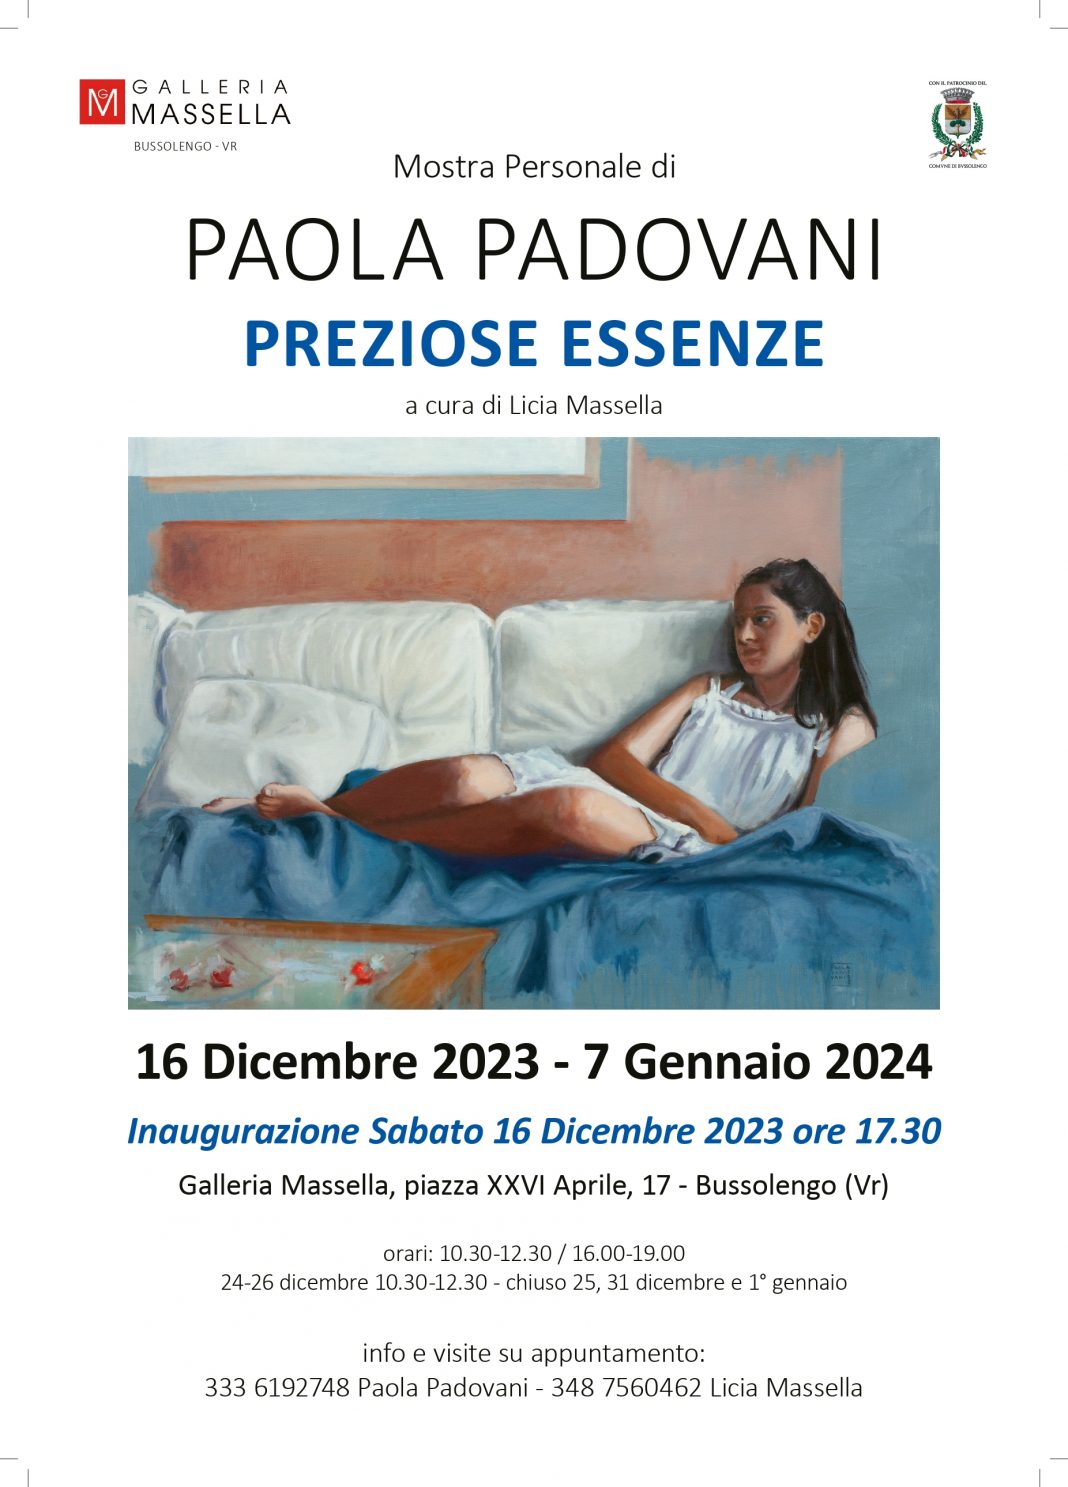 Paola Padovani – Preziose Essenzehttps://www.exibart.com/repository/media/formidable/11/img/31b/Locandina-Preziose-Essenze-in-G-Massella-1068x1487.jpg